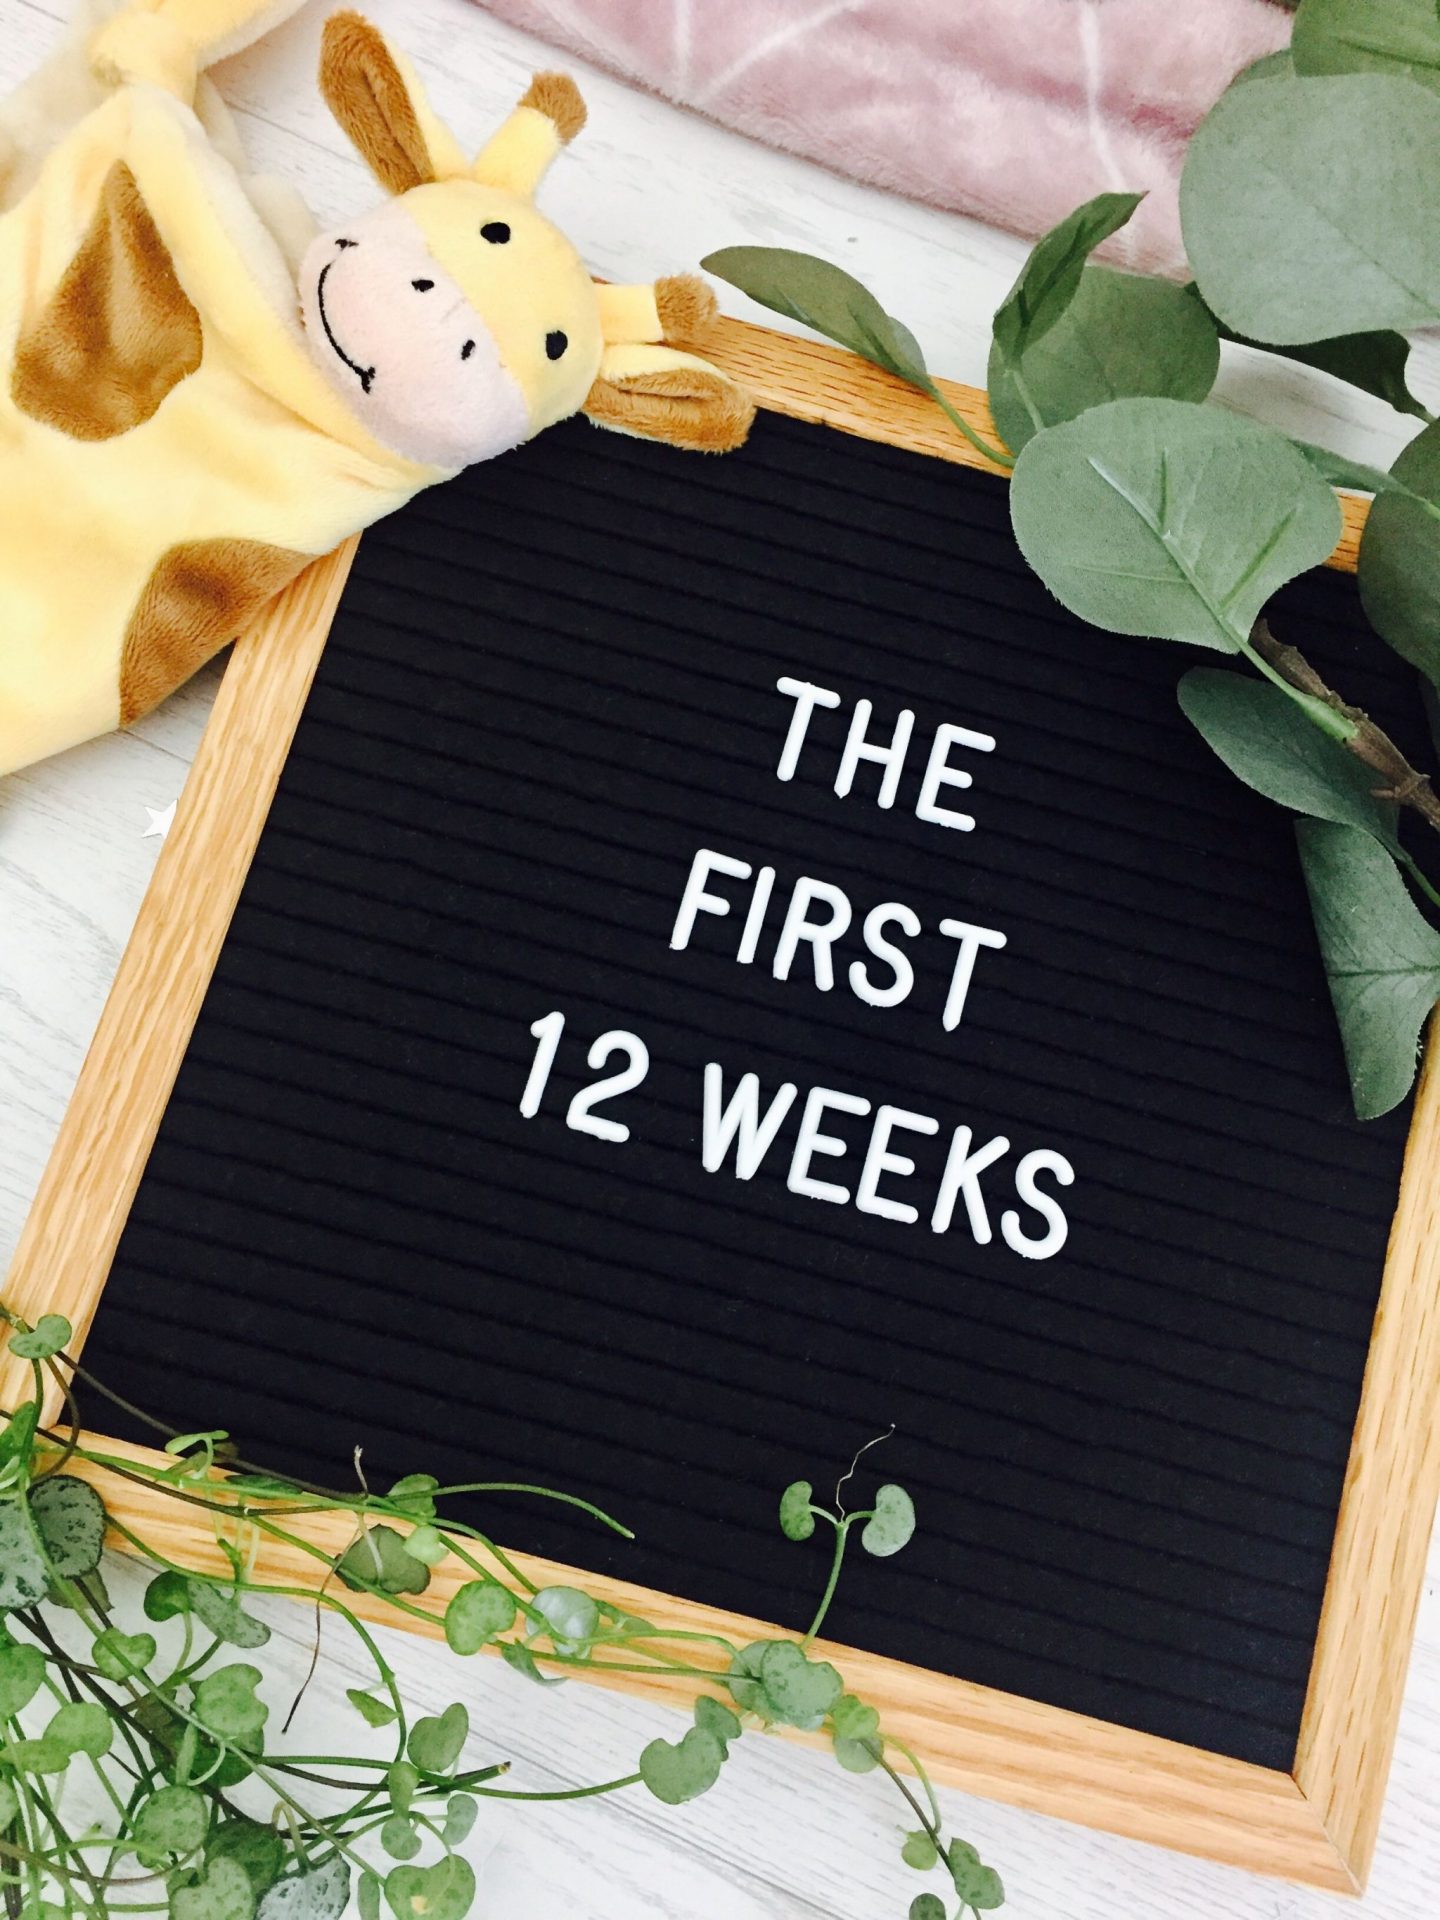 Pregnancy updates first trimester 12 weeks